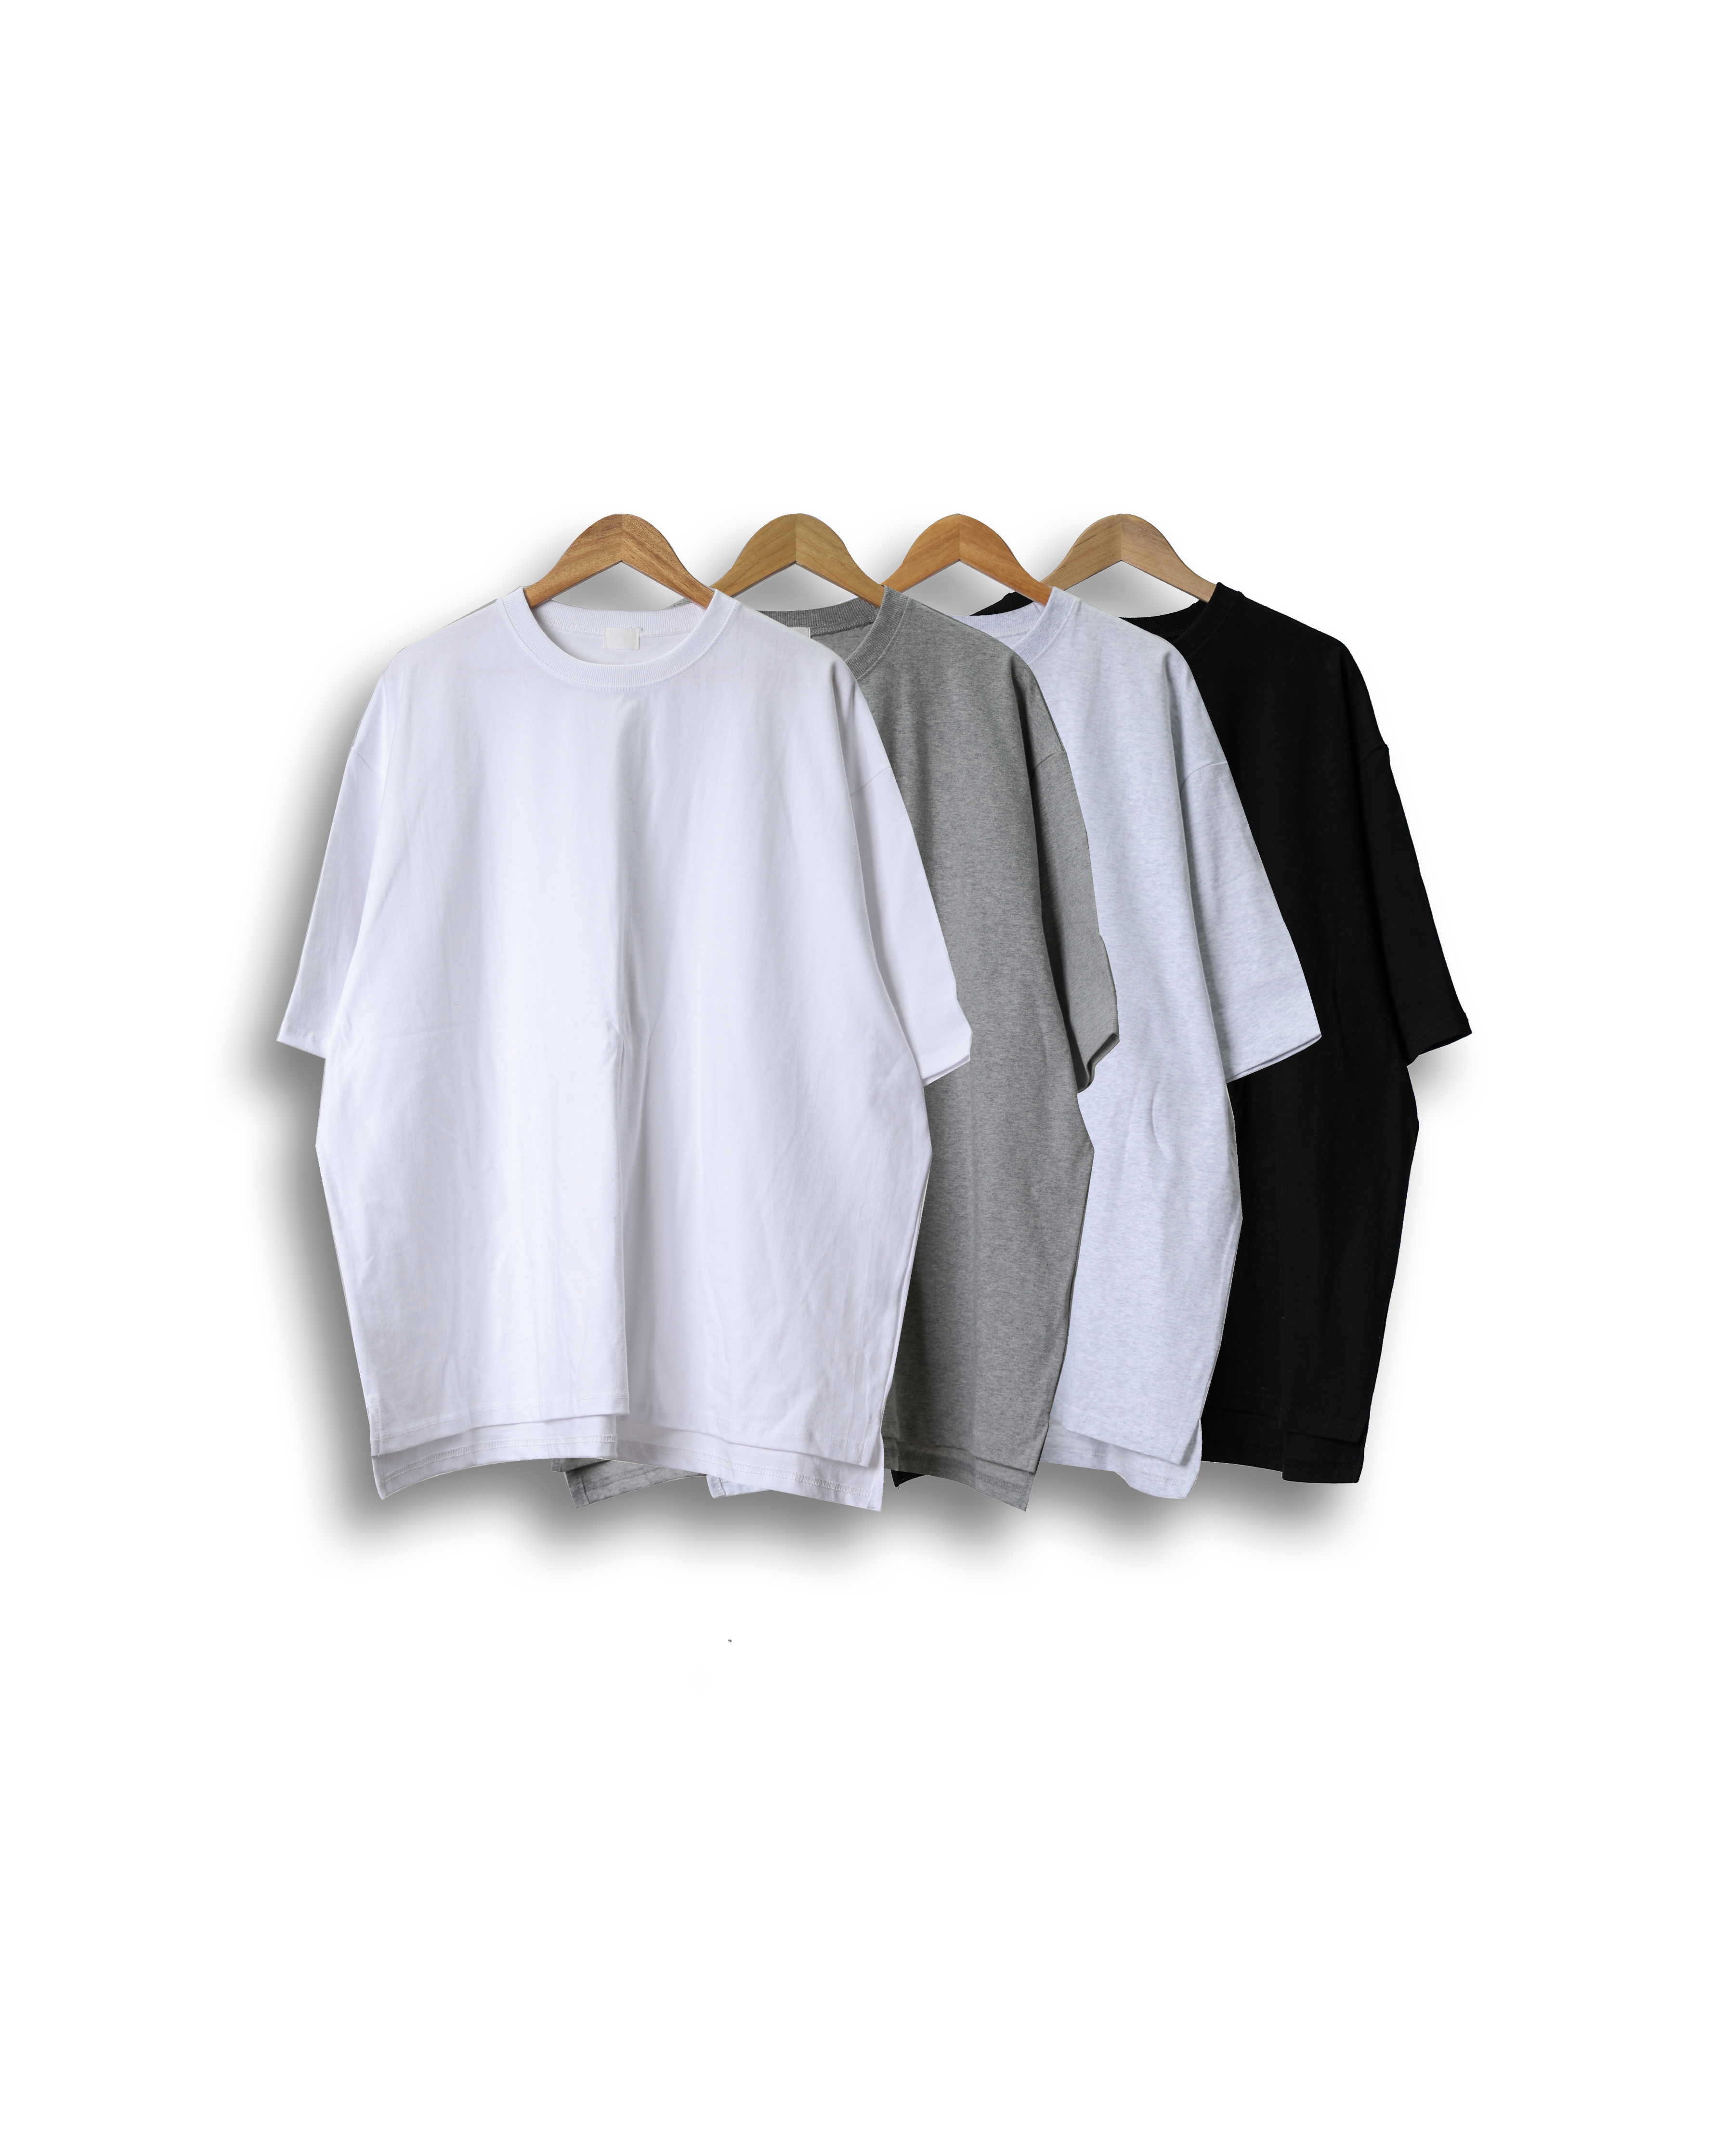 AND One Mile Maxi Sized Basic T Shirts (Black/Gray/Light Gray/White) - 8차 리오더 (4/30 배송예정)